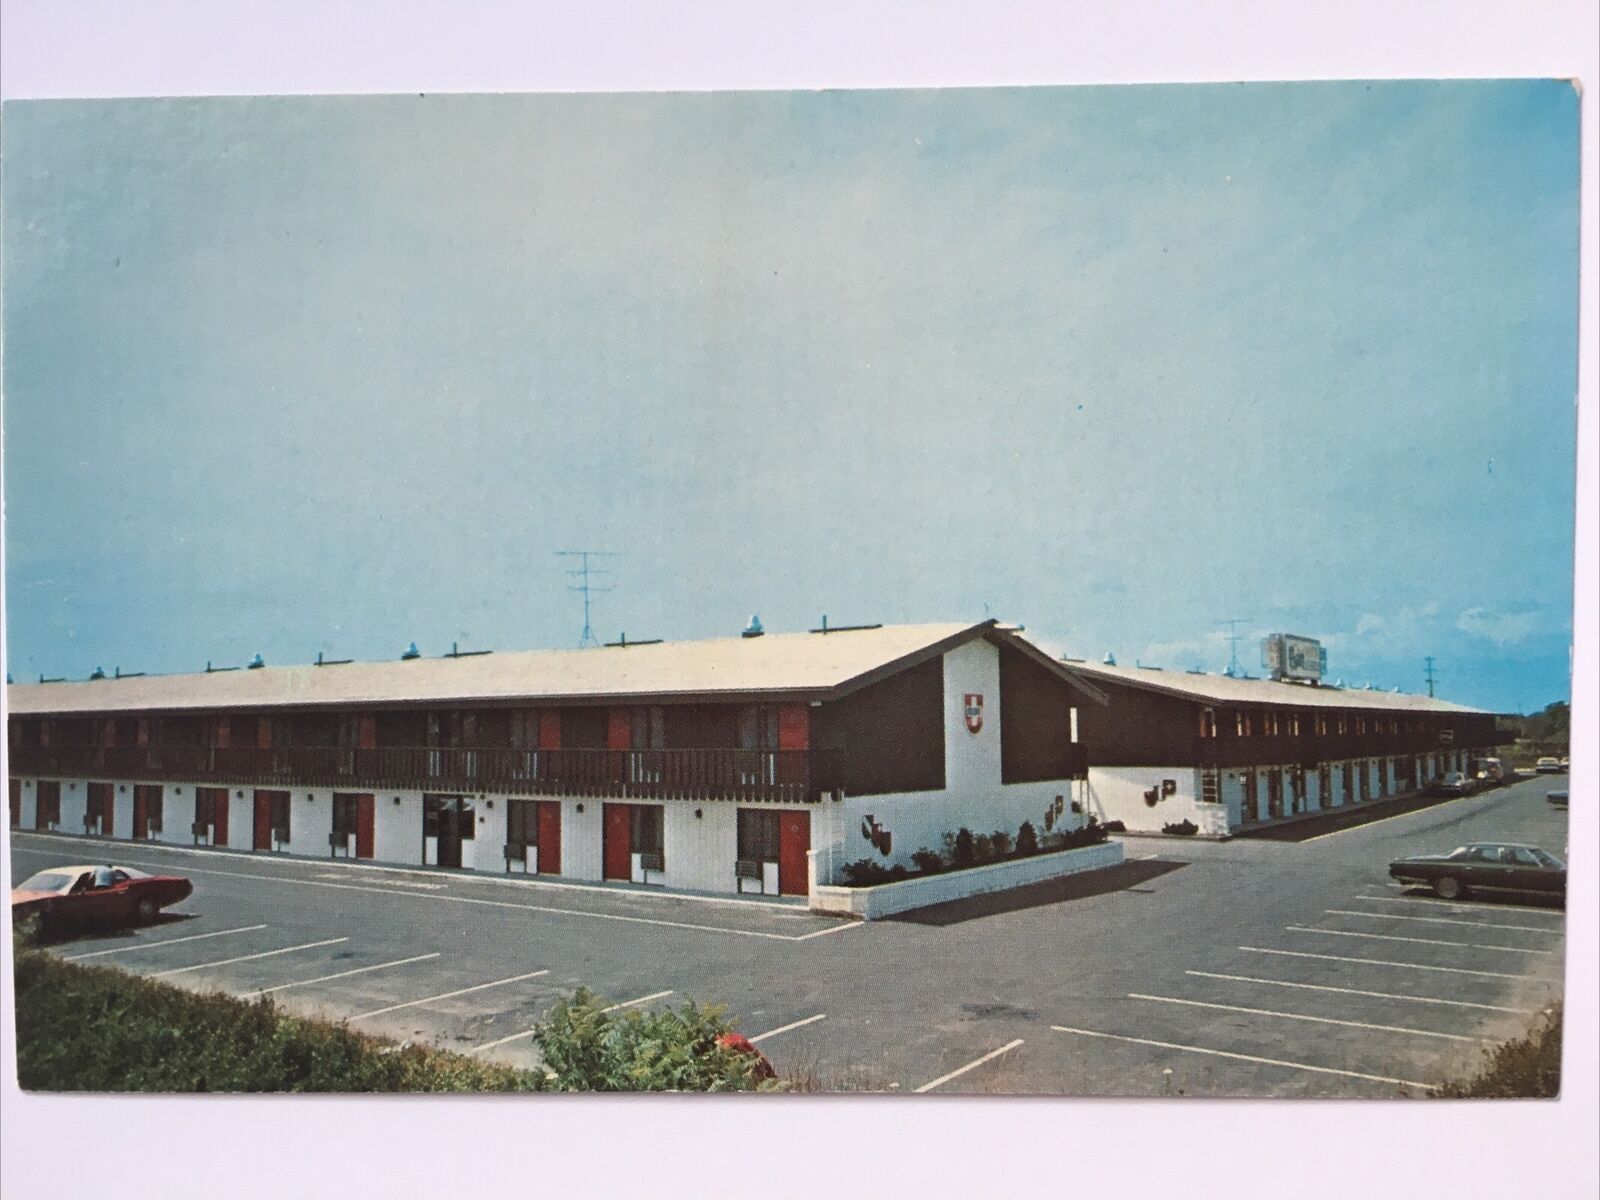 Portland Maine Susse Chalet Motor Lodge 1970s Hotel Cars Advertising Postcard